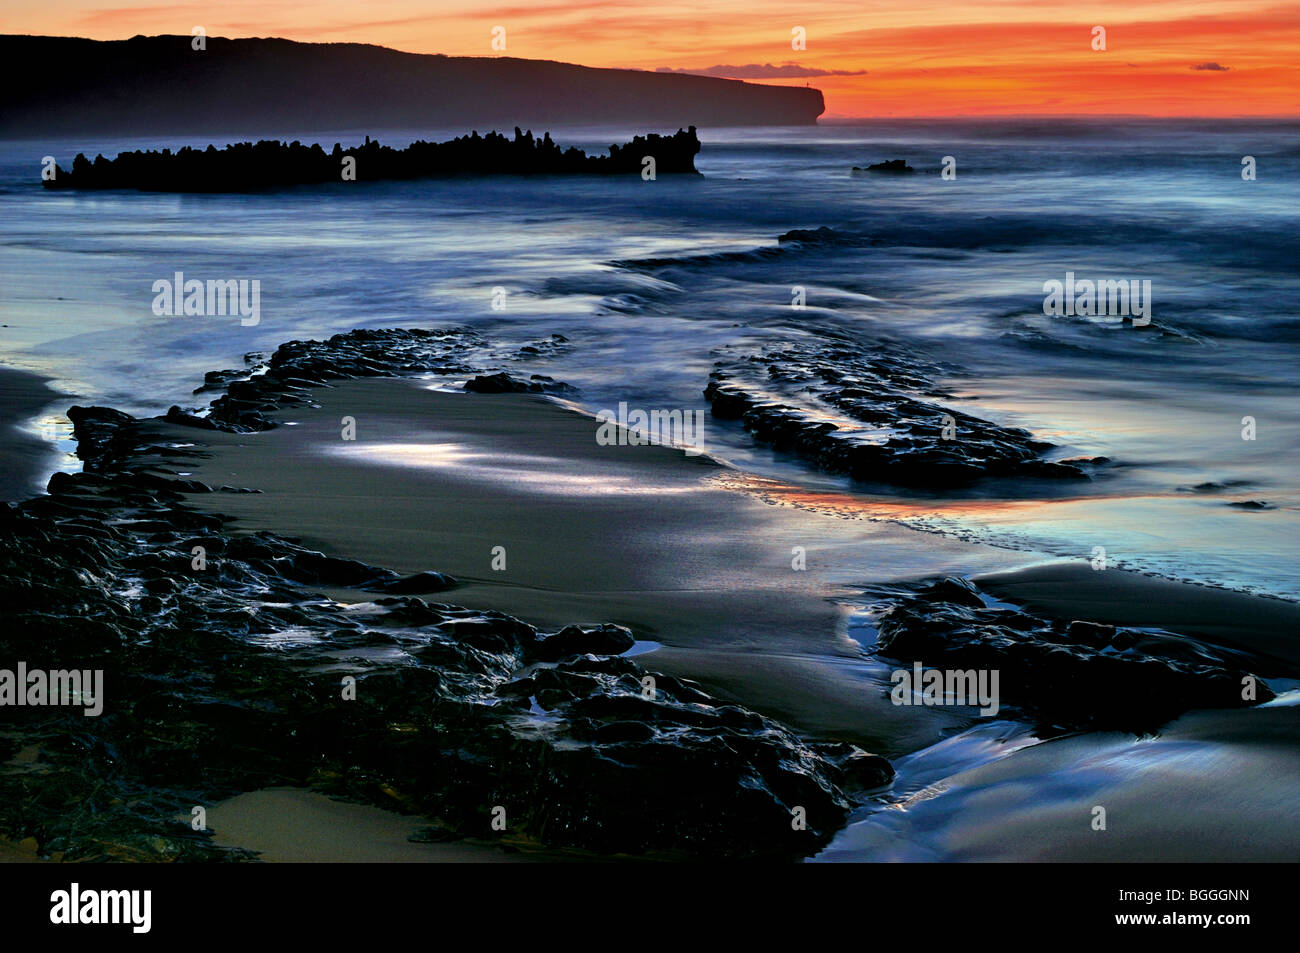 Portugal, Algarve: Sonnenuntergang am Strand Praia da Amoreira Stockfoto